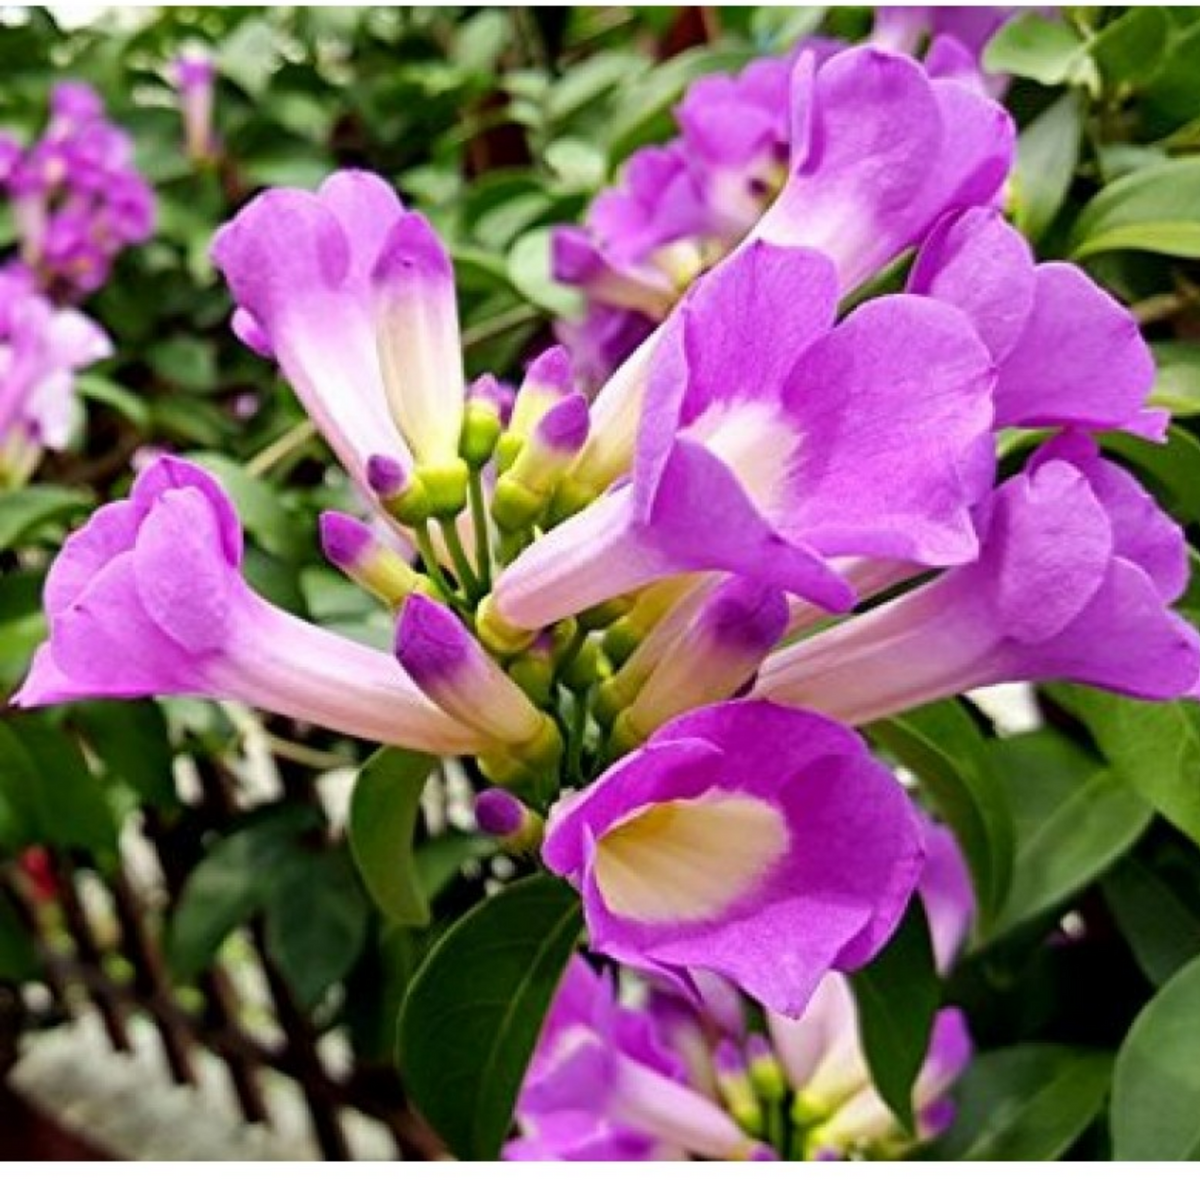 Garlic Vine -  ( Mansoa alliacea )Flowering/Ornamental/Medicinal/ Creeper Live Plant (Home & Garden)